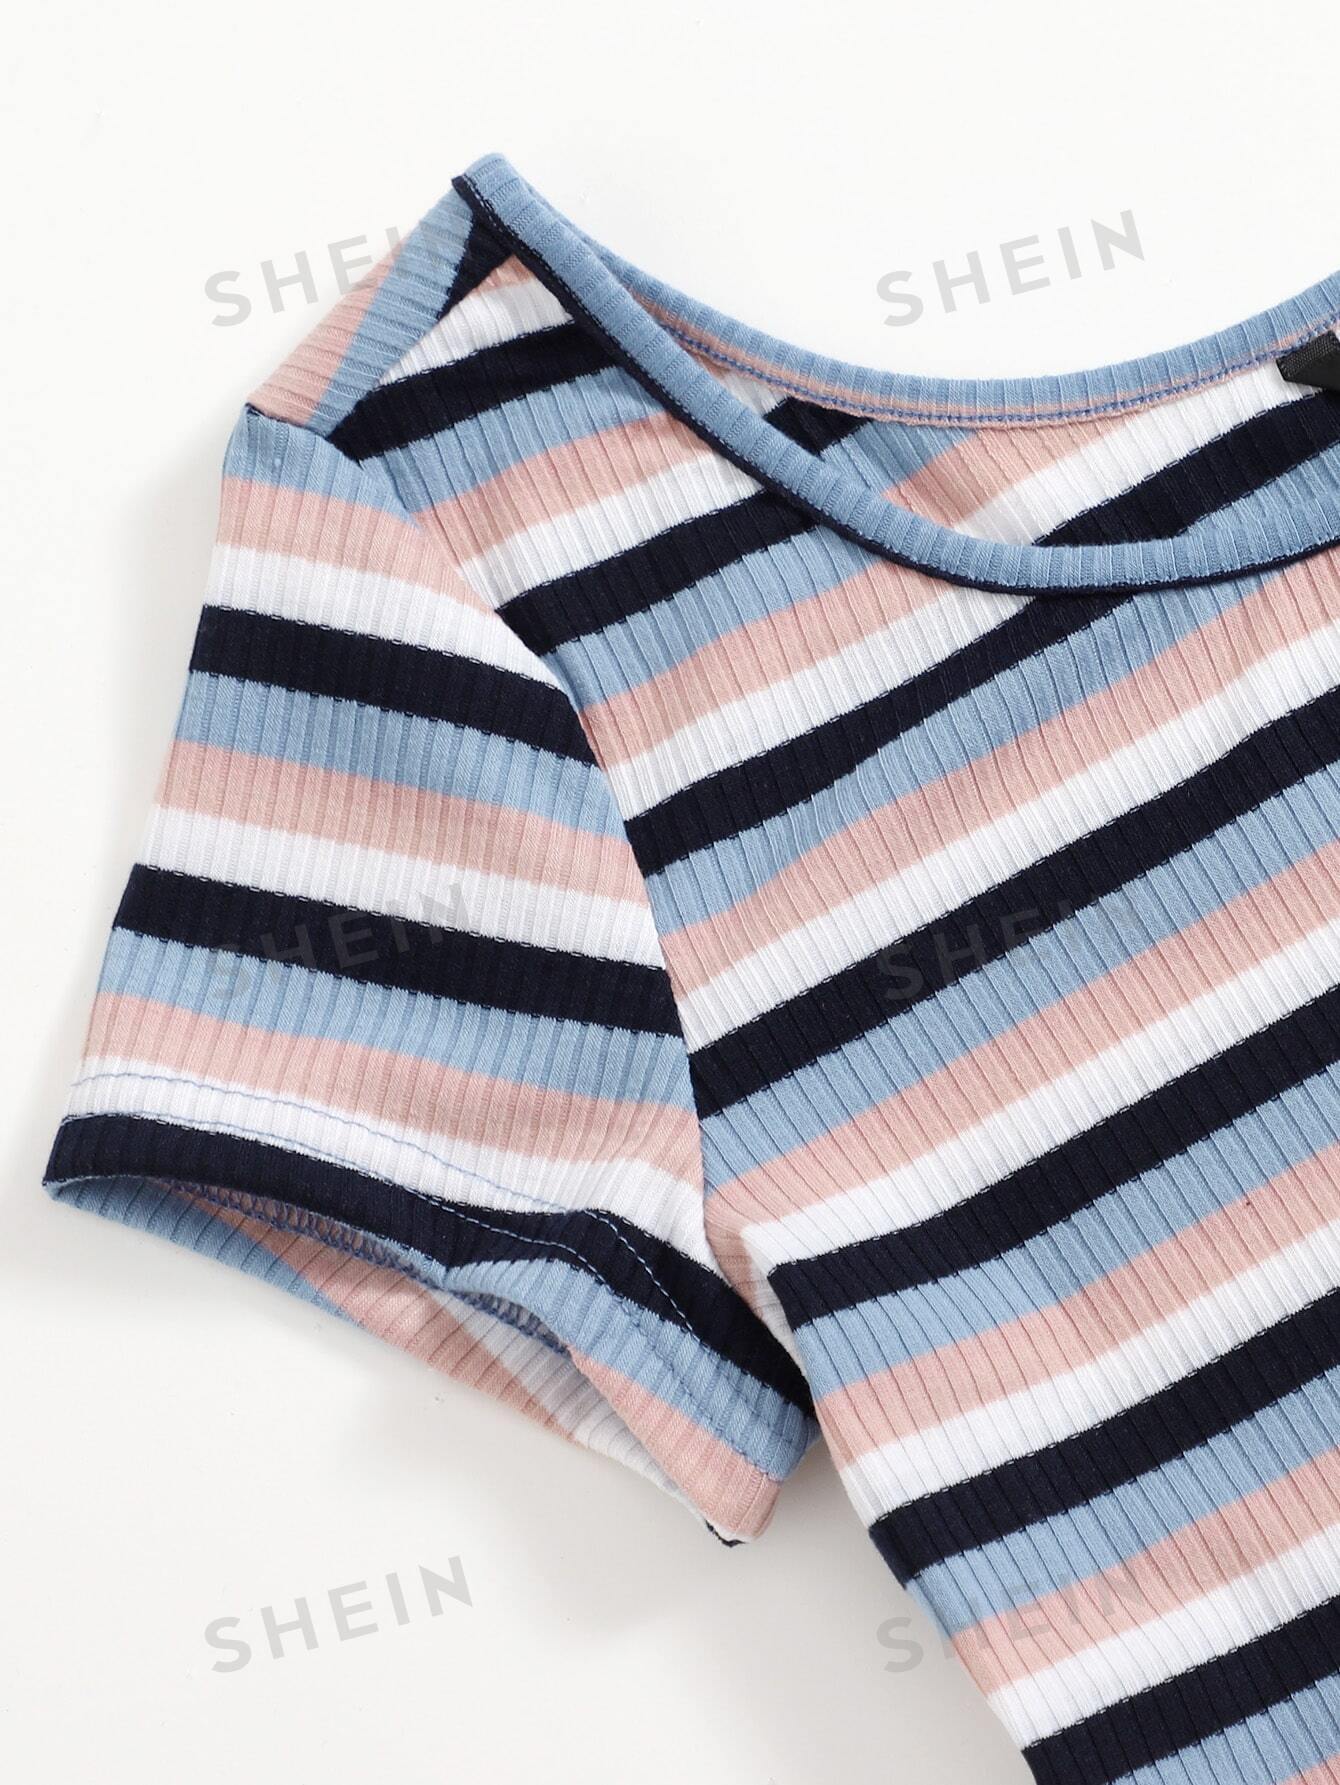 SHEIN EZwear Rainbow Striped Crop Top - Negative Apparel